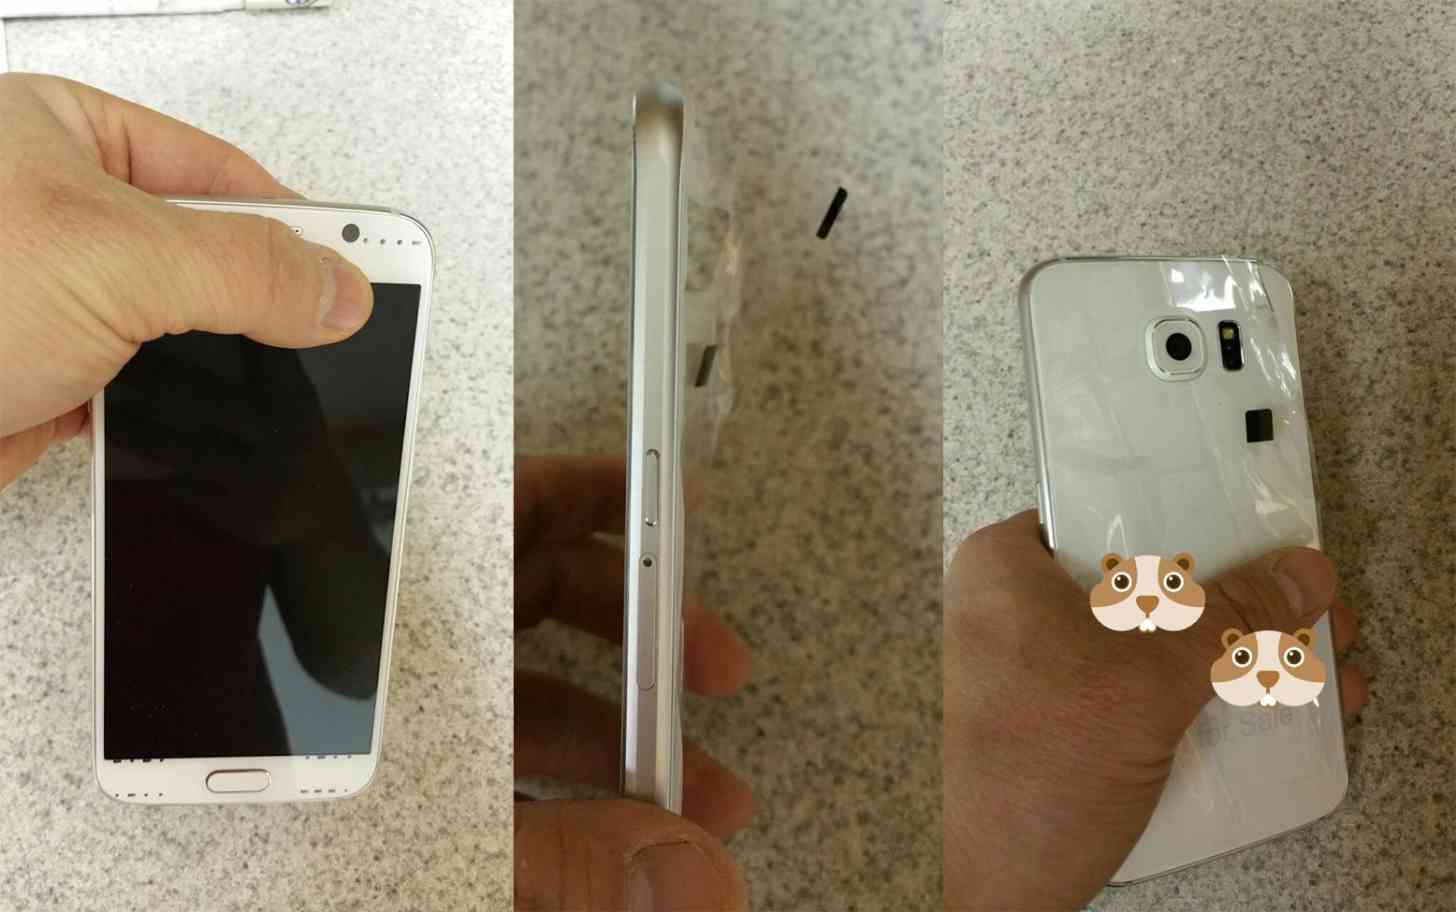 Samsung Galaxy S6 images leak